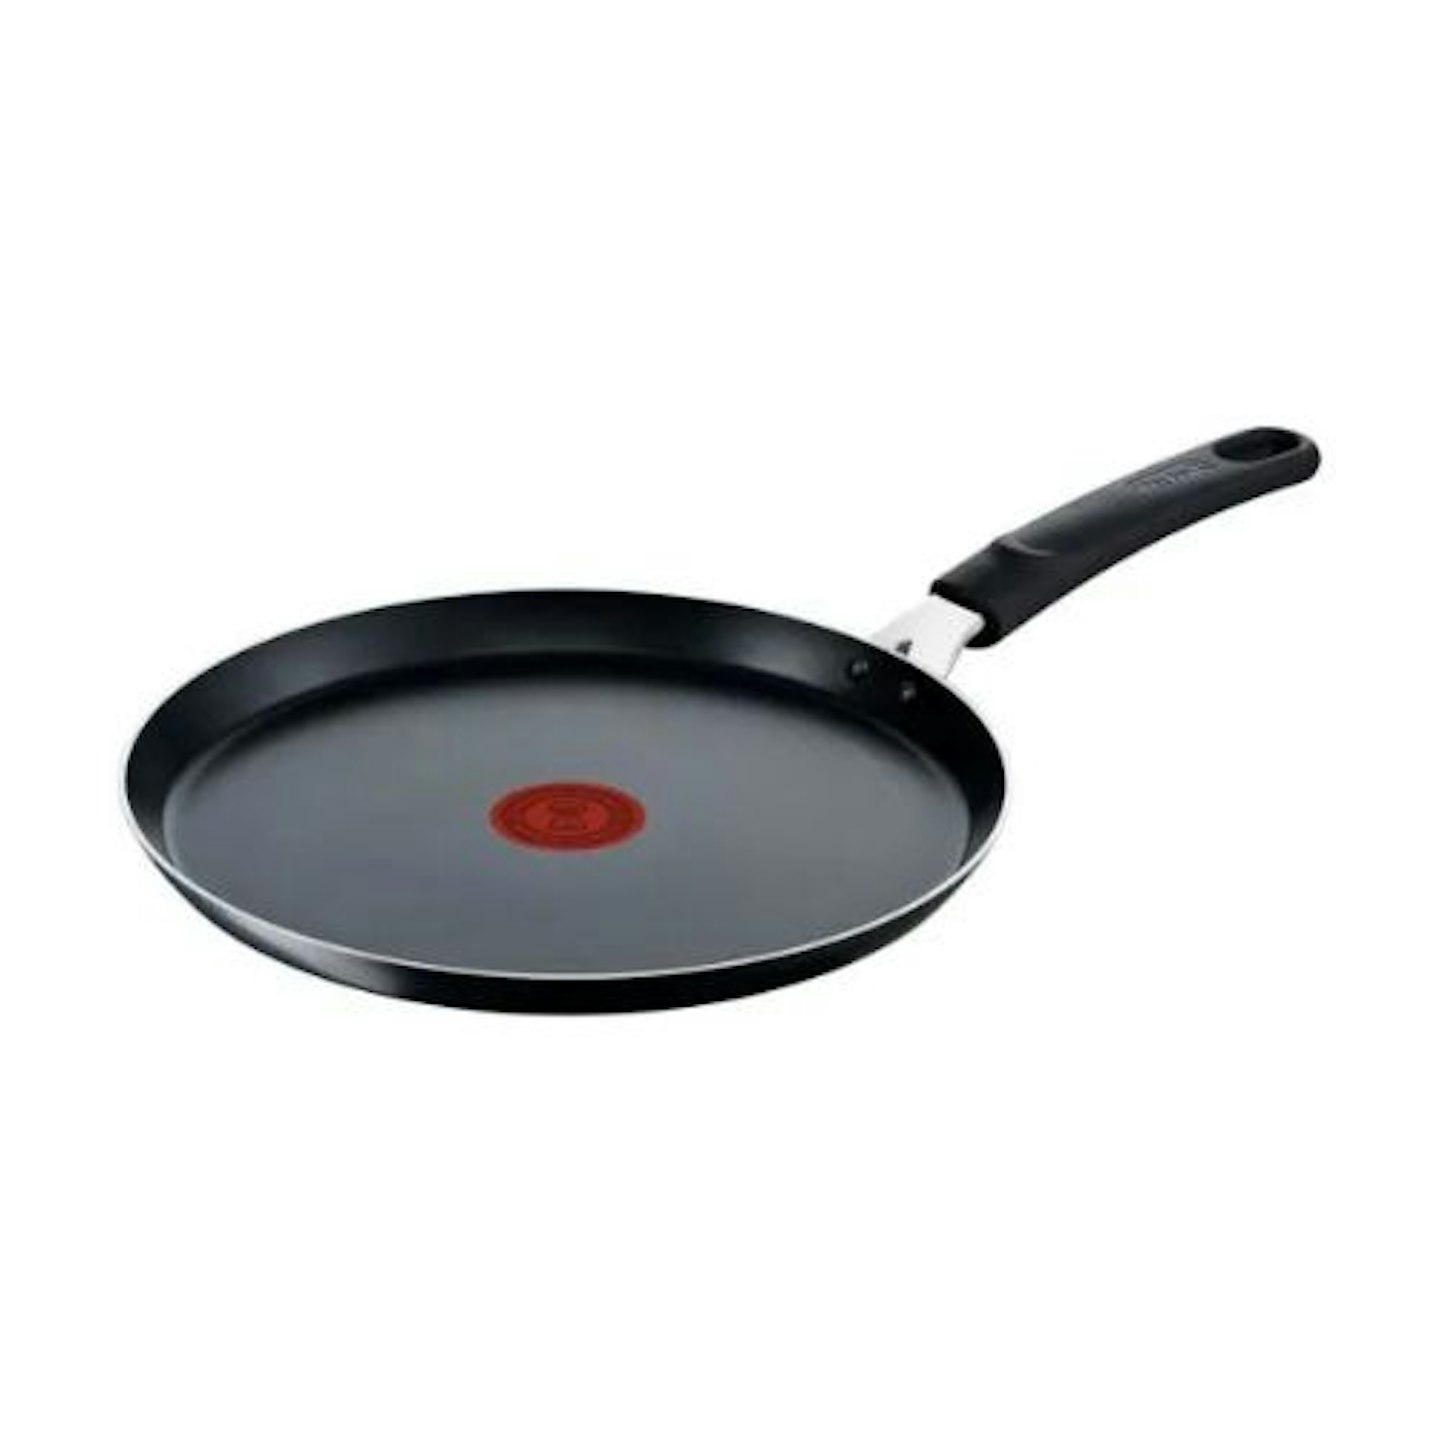 Tefal Simplicity B5821002 25cm Pancake Pan